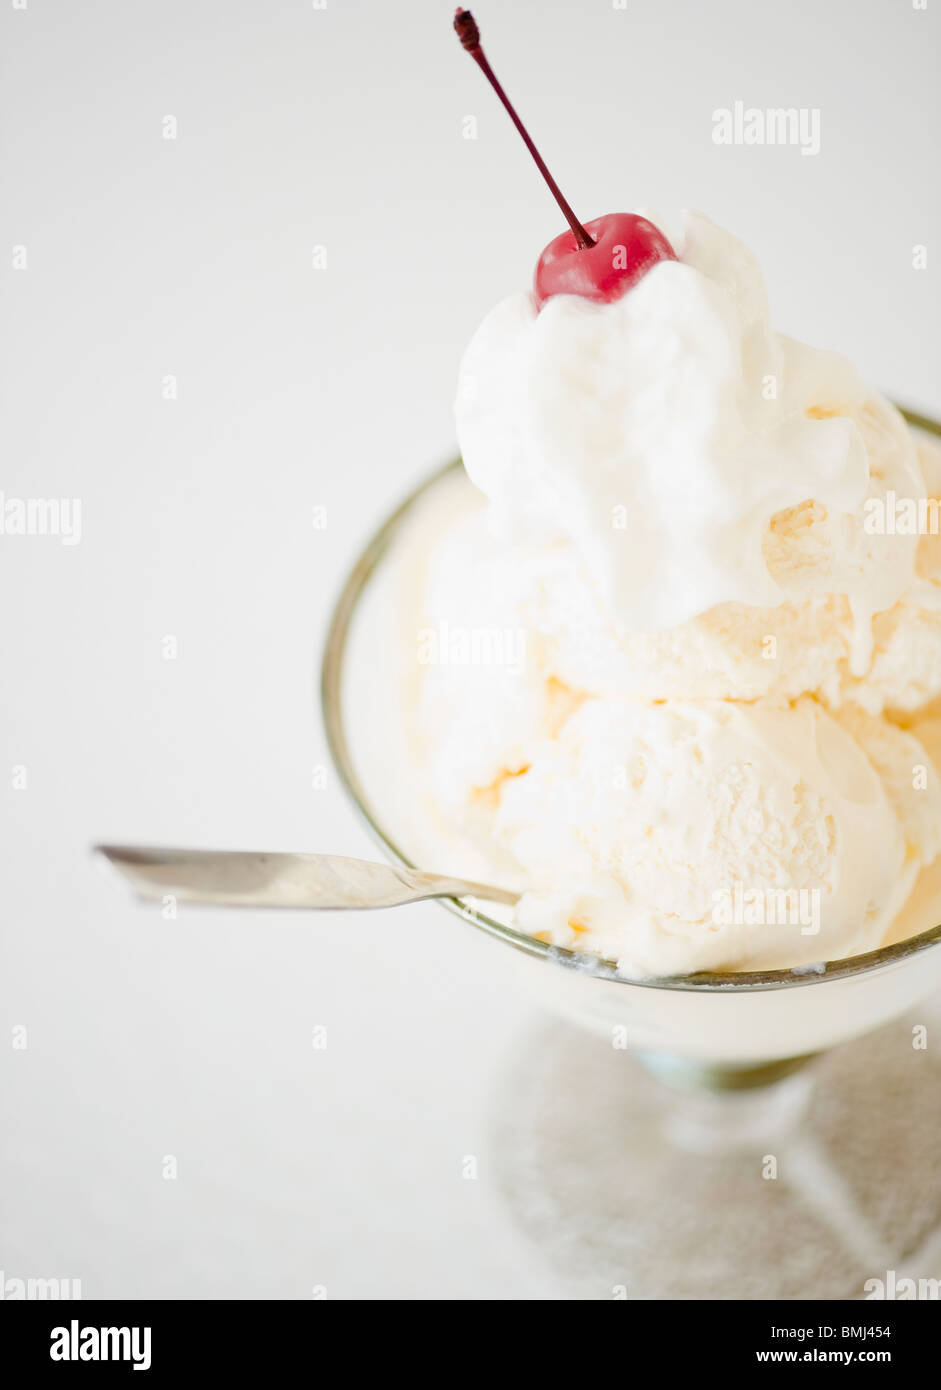 Ice cream with a cherry on top Stock Photo